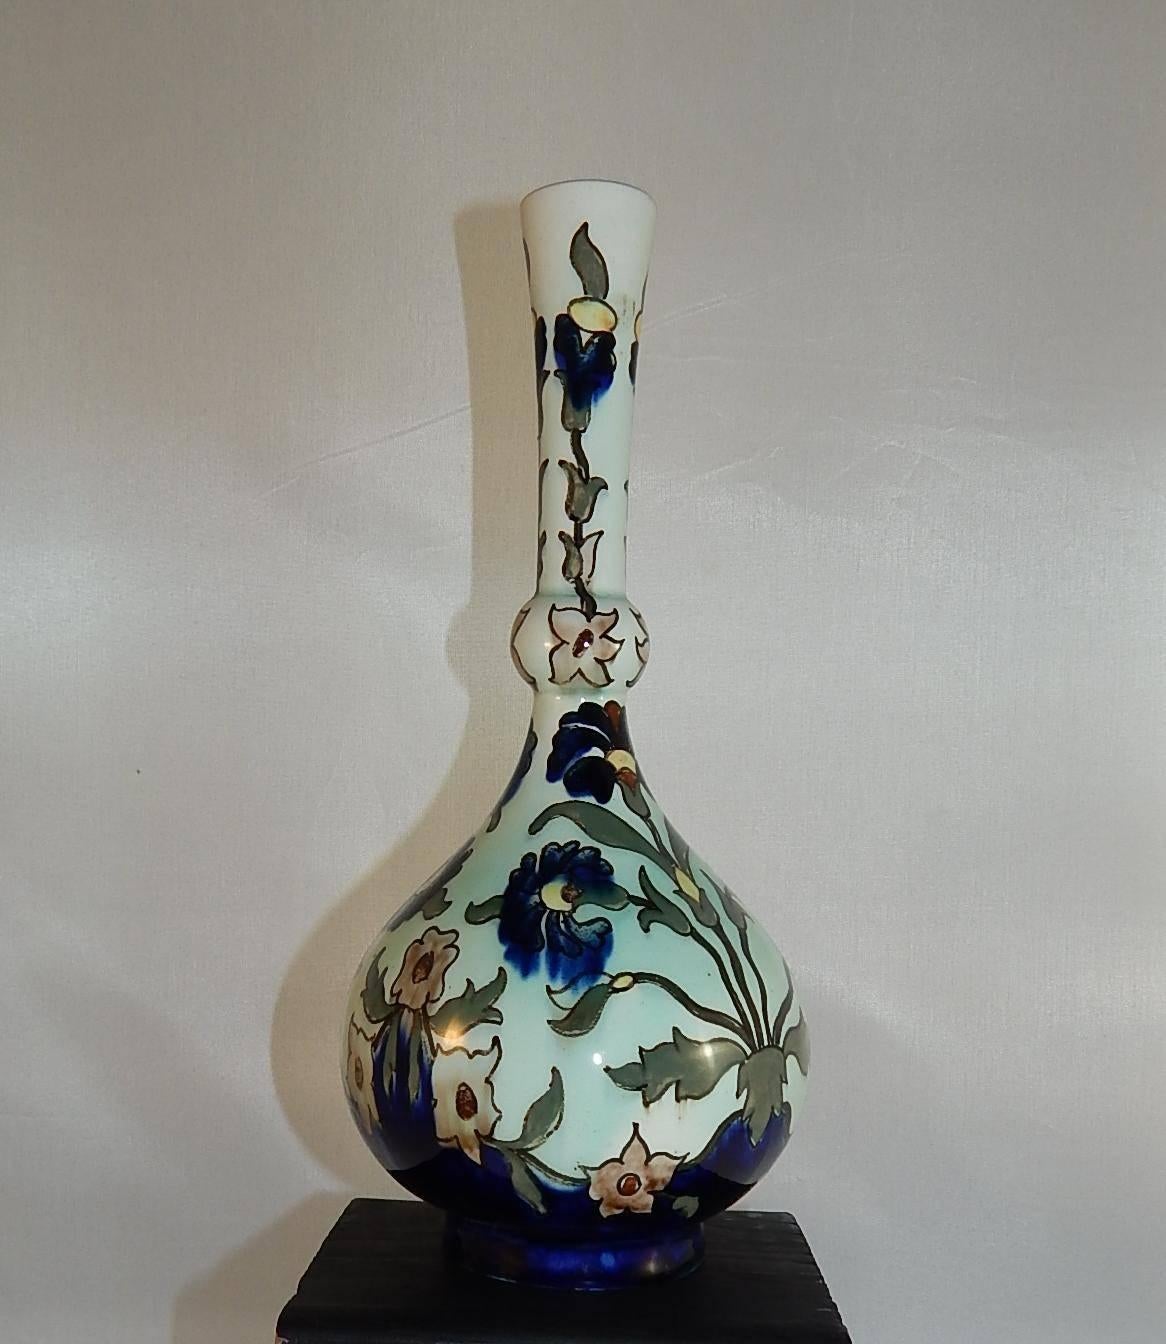 Rozenburg earthenware vase, Holland, circa 1890s.
Polychrome enameled with stylized flowers.
Painted mark: Rozenburg denHaag K522 and the stork symbol.
Measures: 8.63